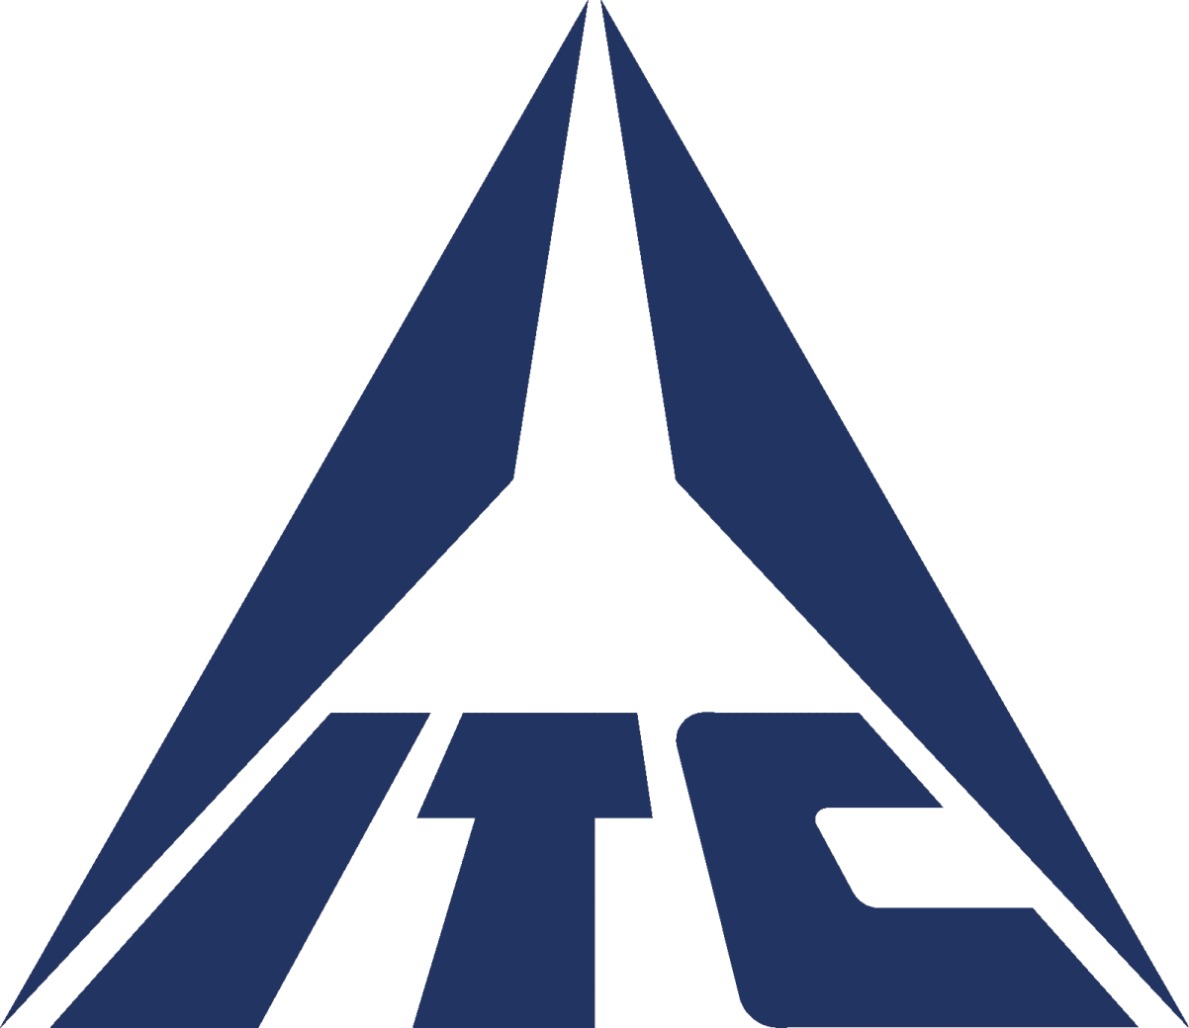 ITC_logo